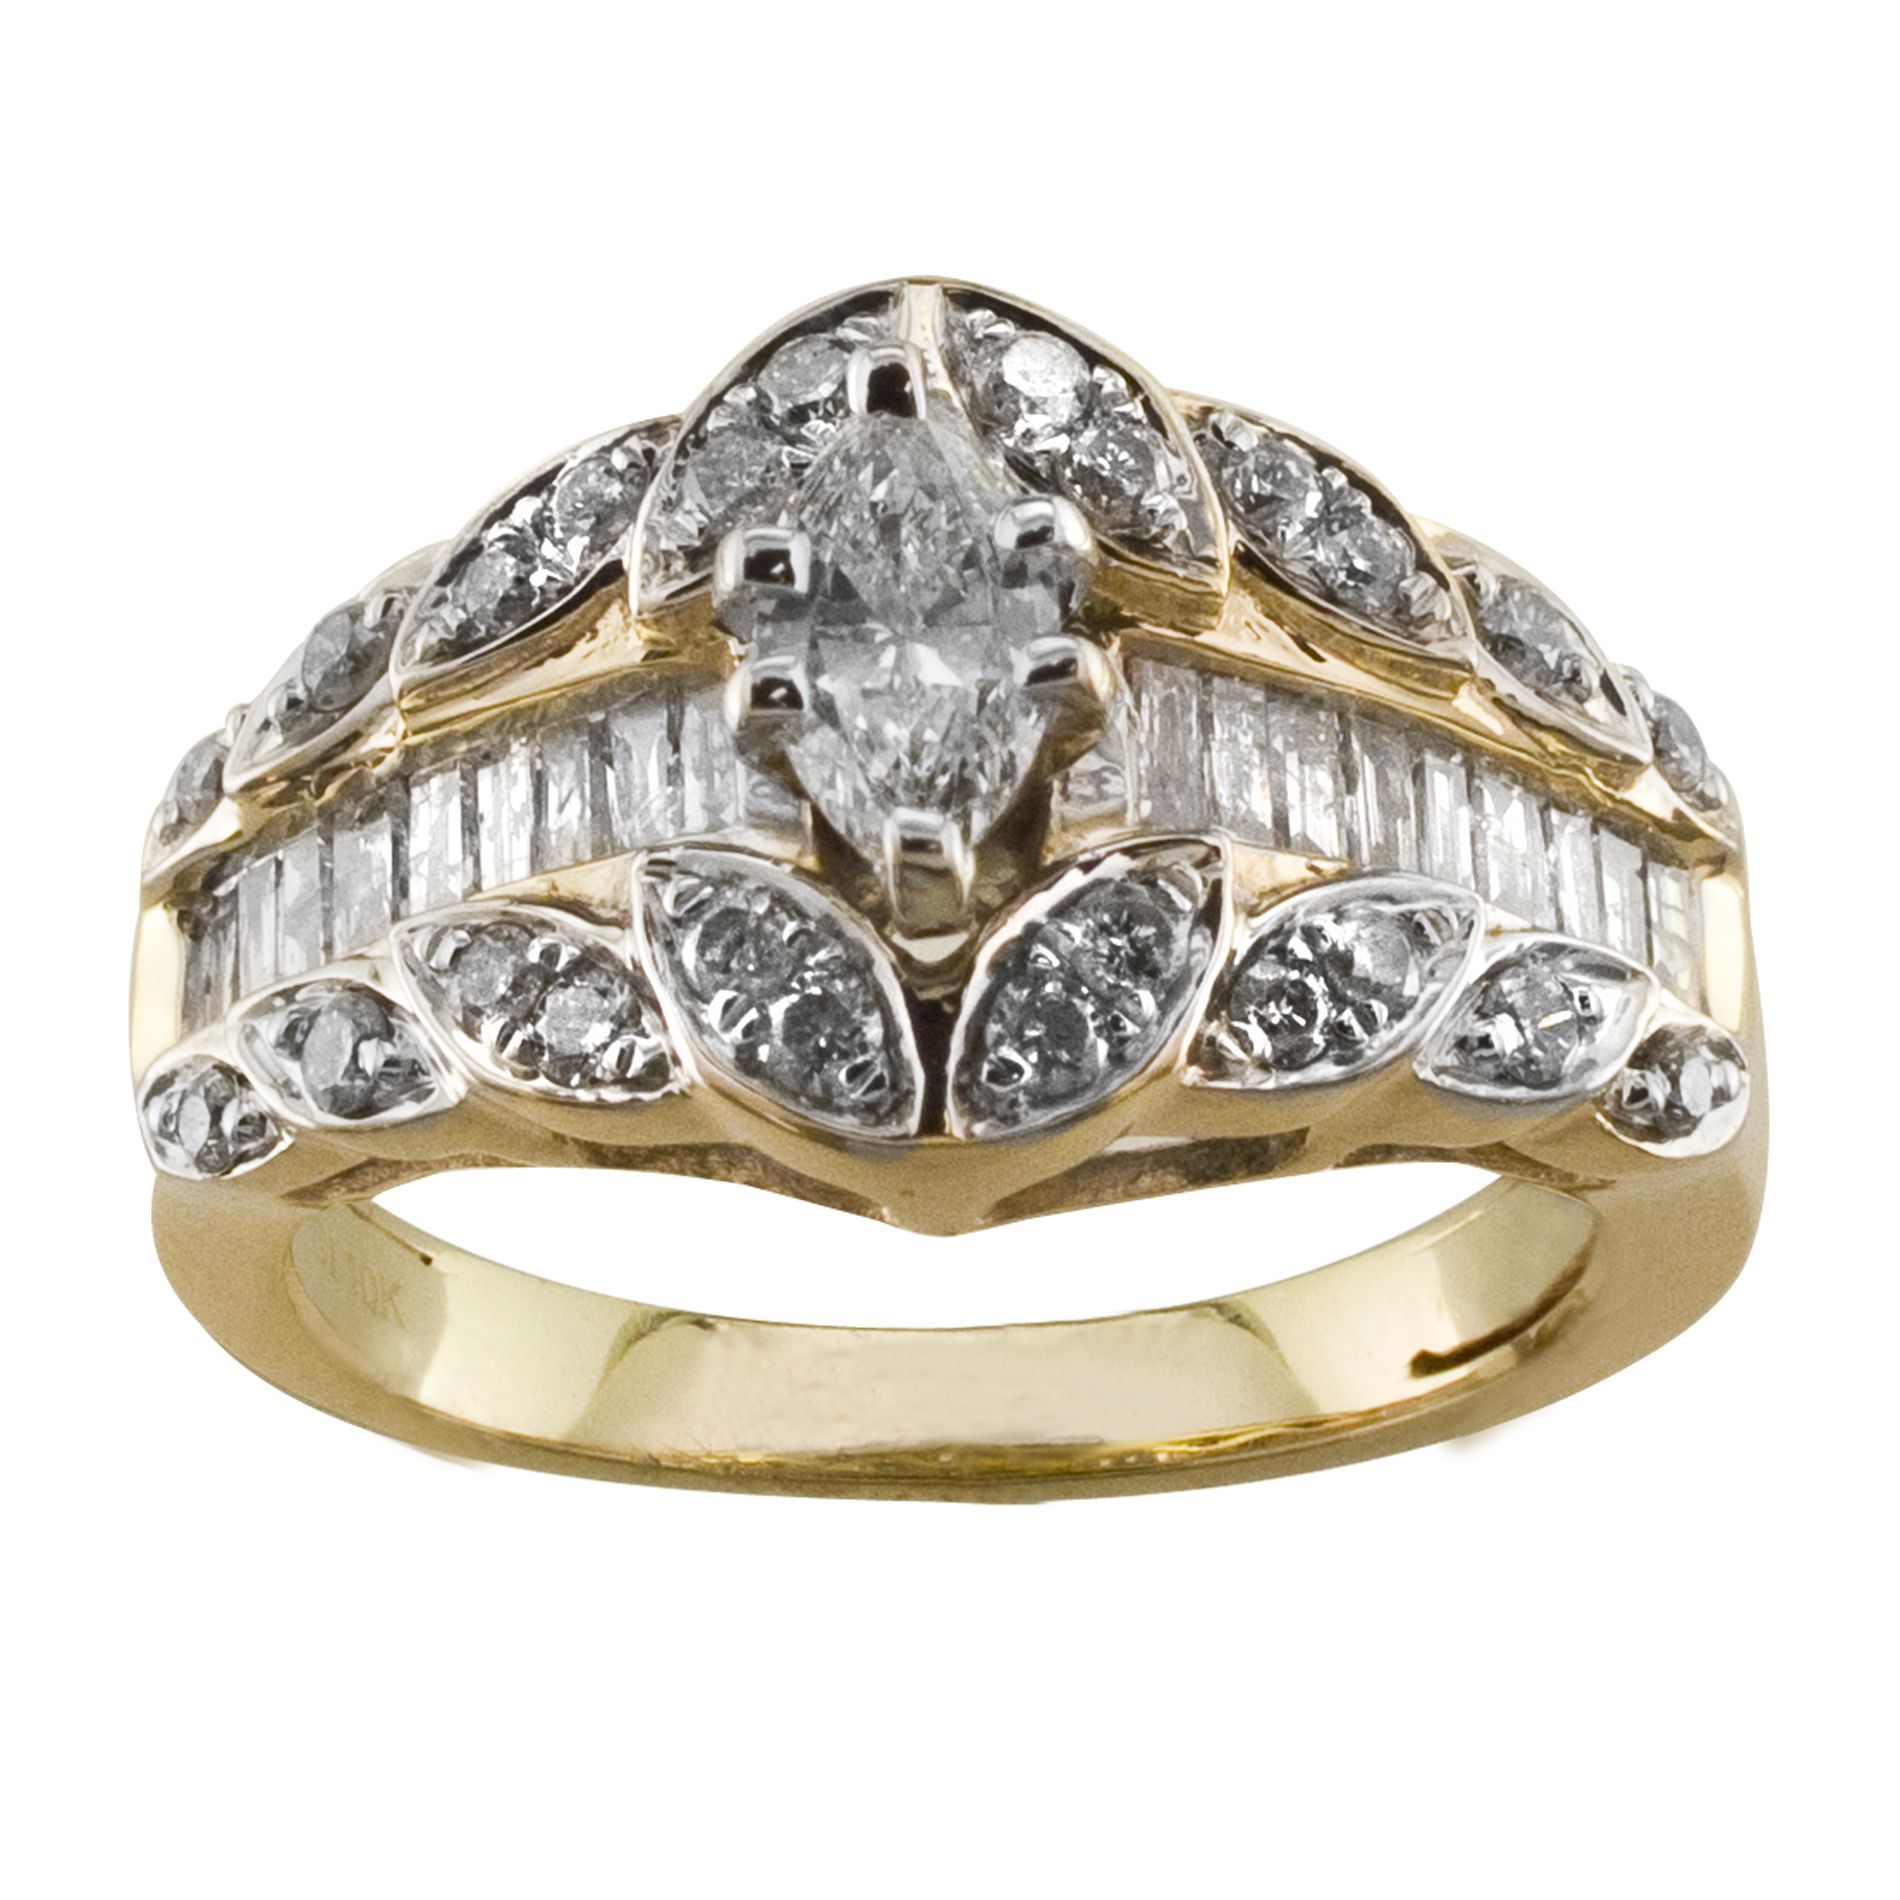 1 cttw Diamond Engagement Ring